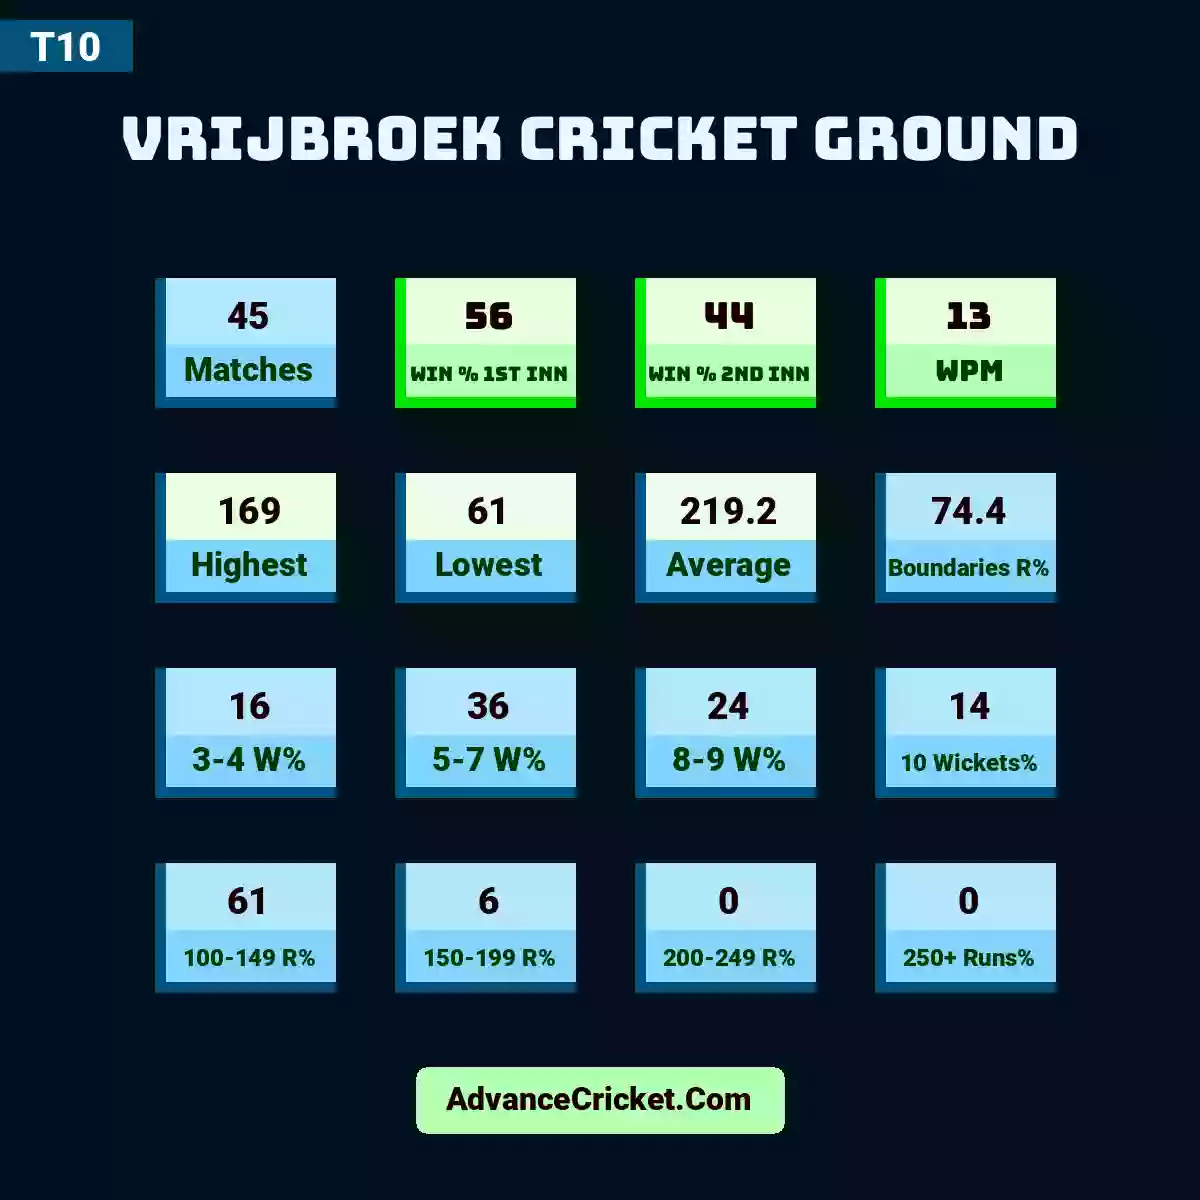 Image showing Vrijbroek Cricket Ground with Matches: 45, Win % 1st Inn: 56, Win % 2nd Inn: 44, WPM: 13, Highest: 169, Lowest: 61, Average: 219.2, Boundaries R%: 74.4, 3-4 W%: 16, 5-7 W%: 36, 8-9 W%: 24, 10 Wickets%: 14, 100-149 R%: 61, 150-199 R%: 6, 200-249 R%: 0, 250+ Runs%: 0.